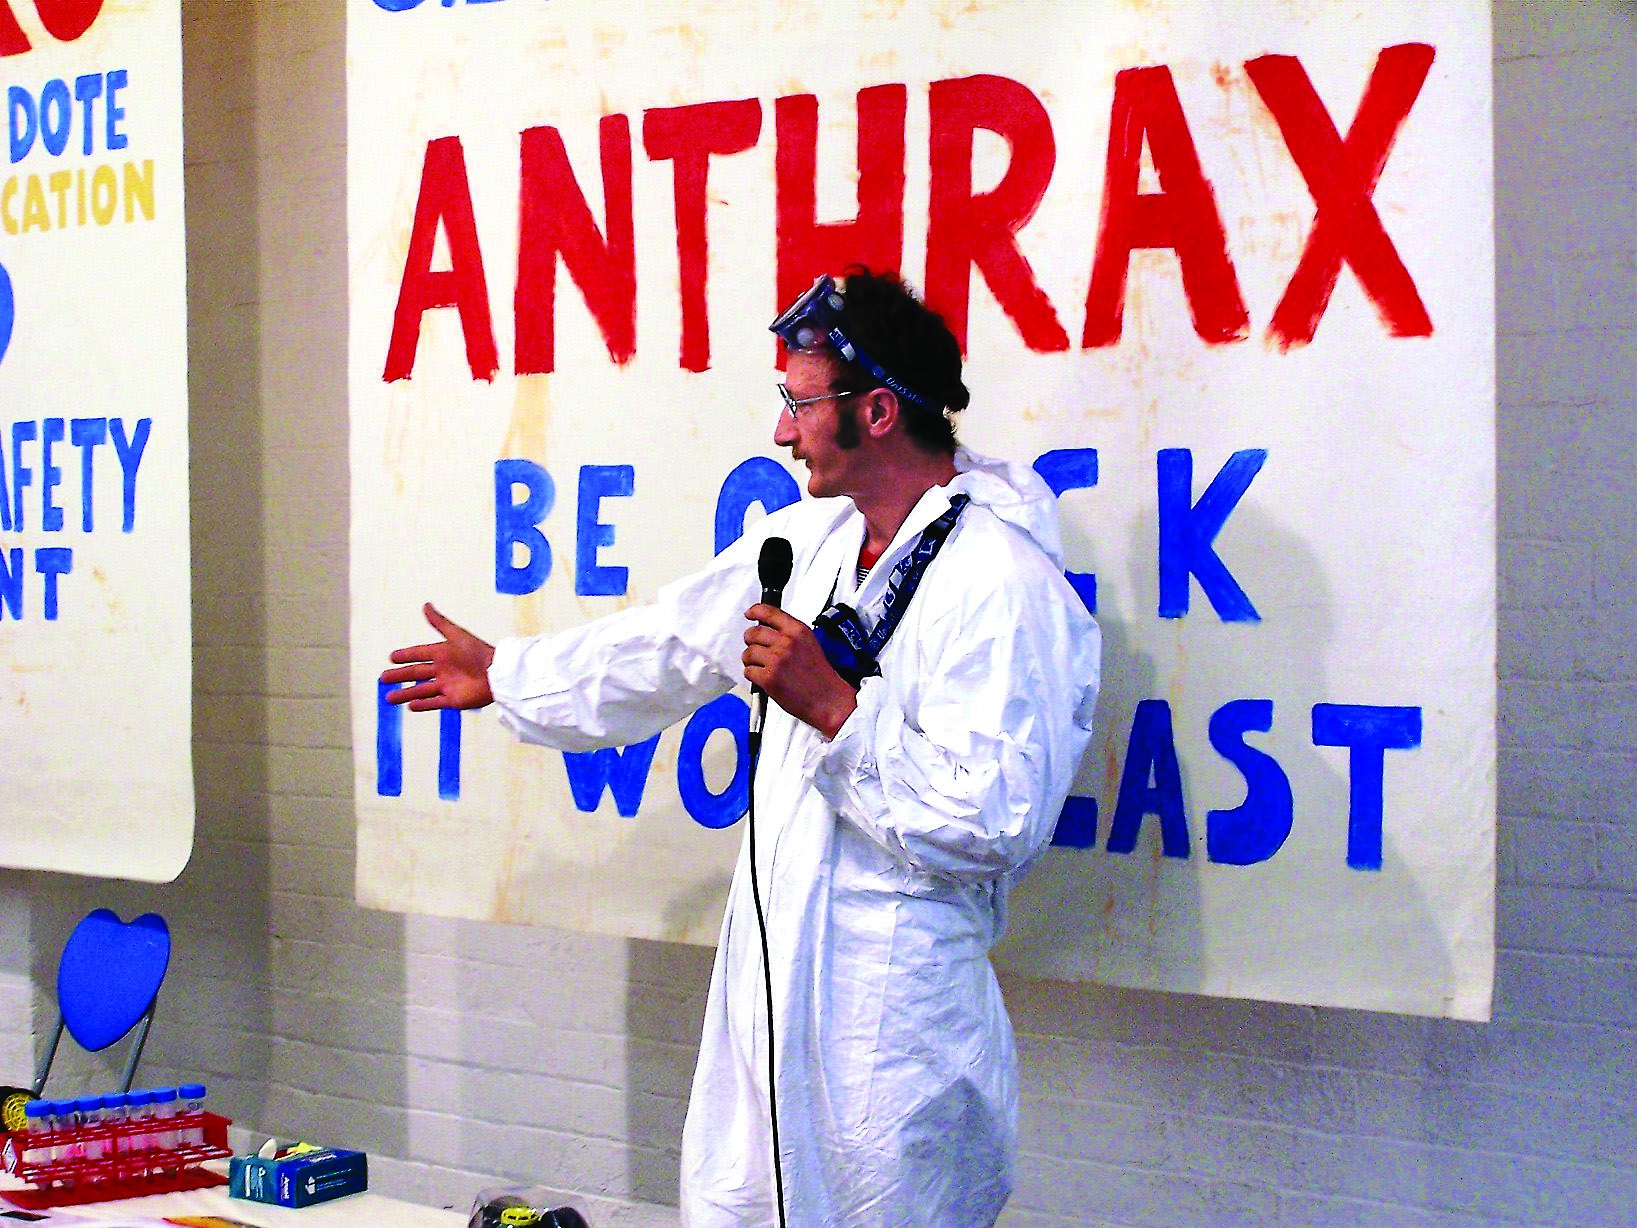 anthrax salesman